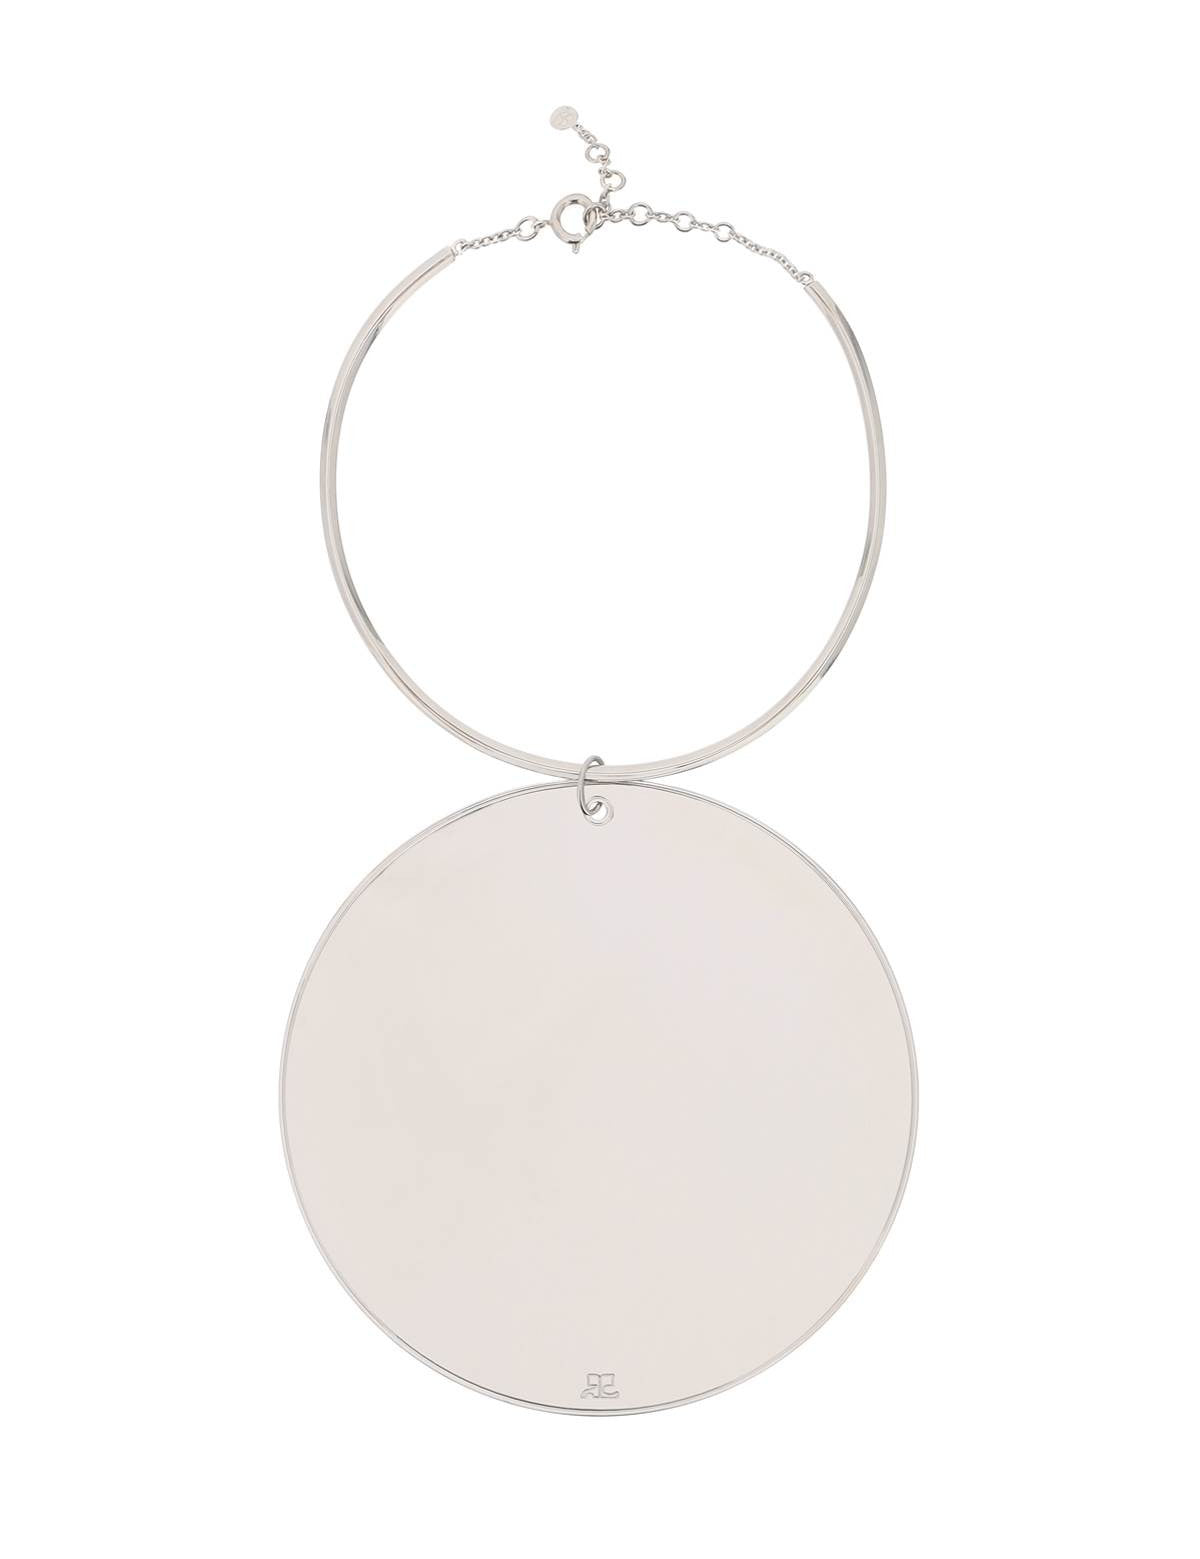 courreges-mirror-charm-necklace.jpg